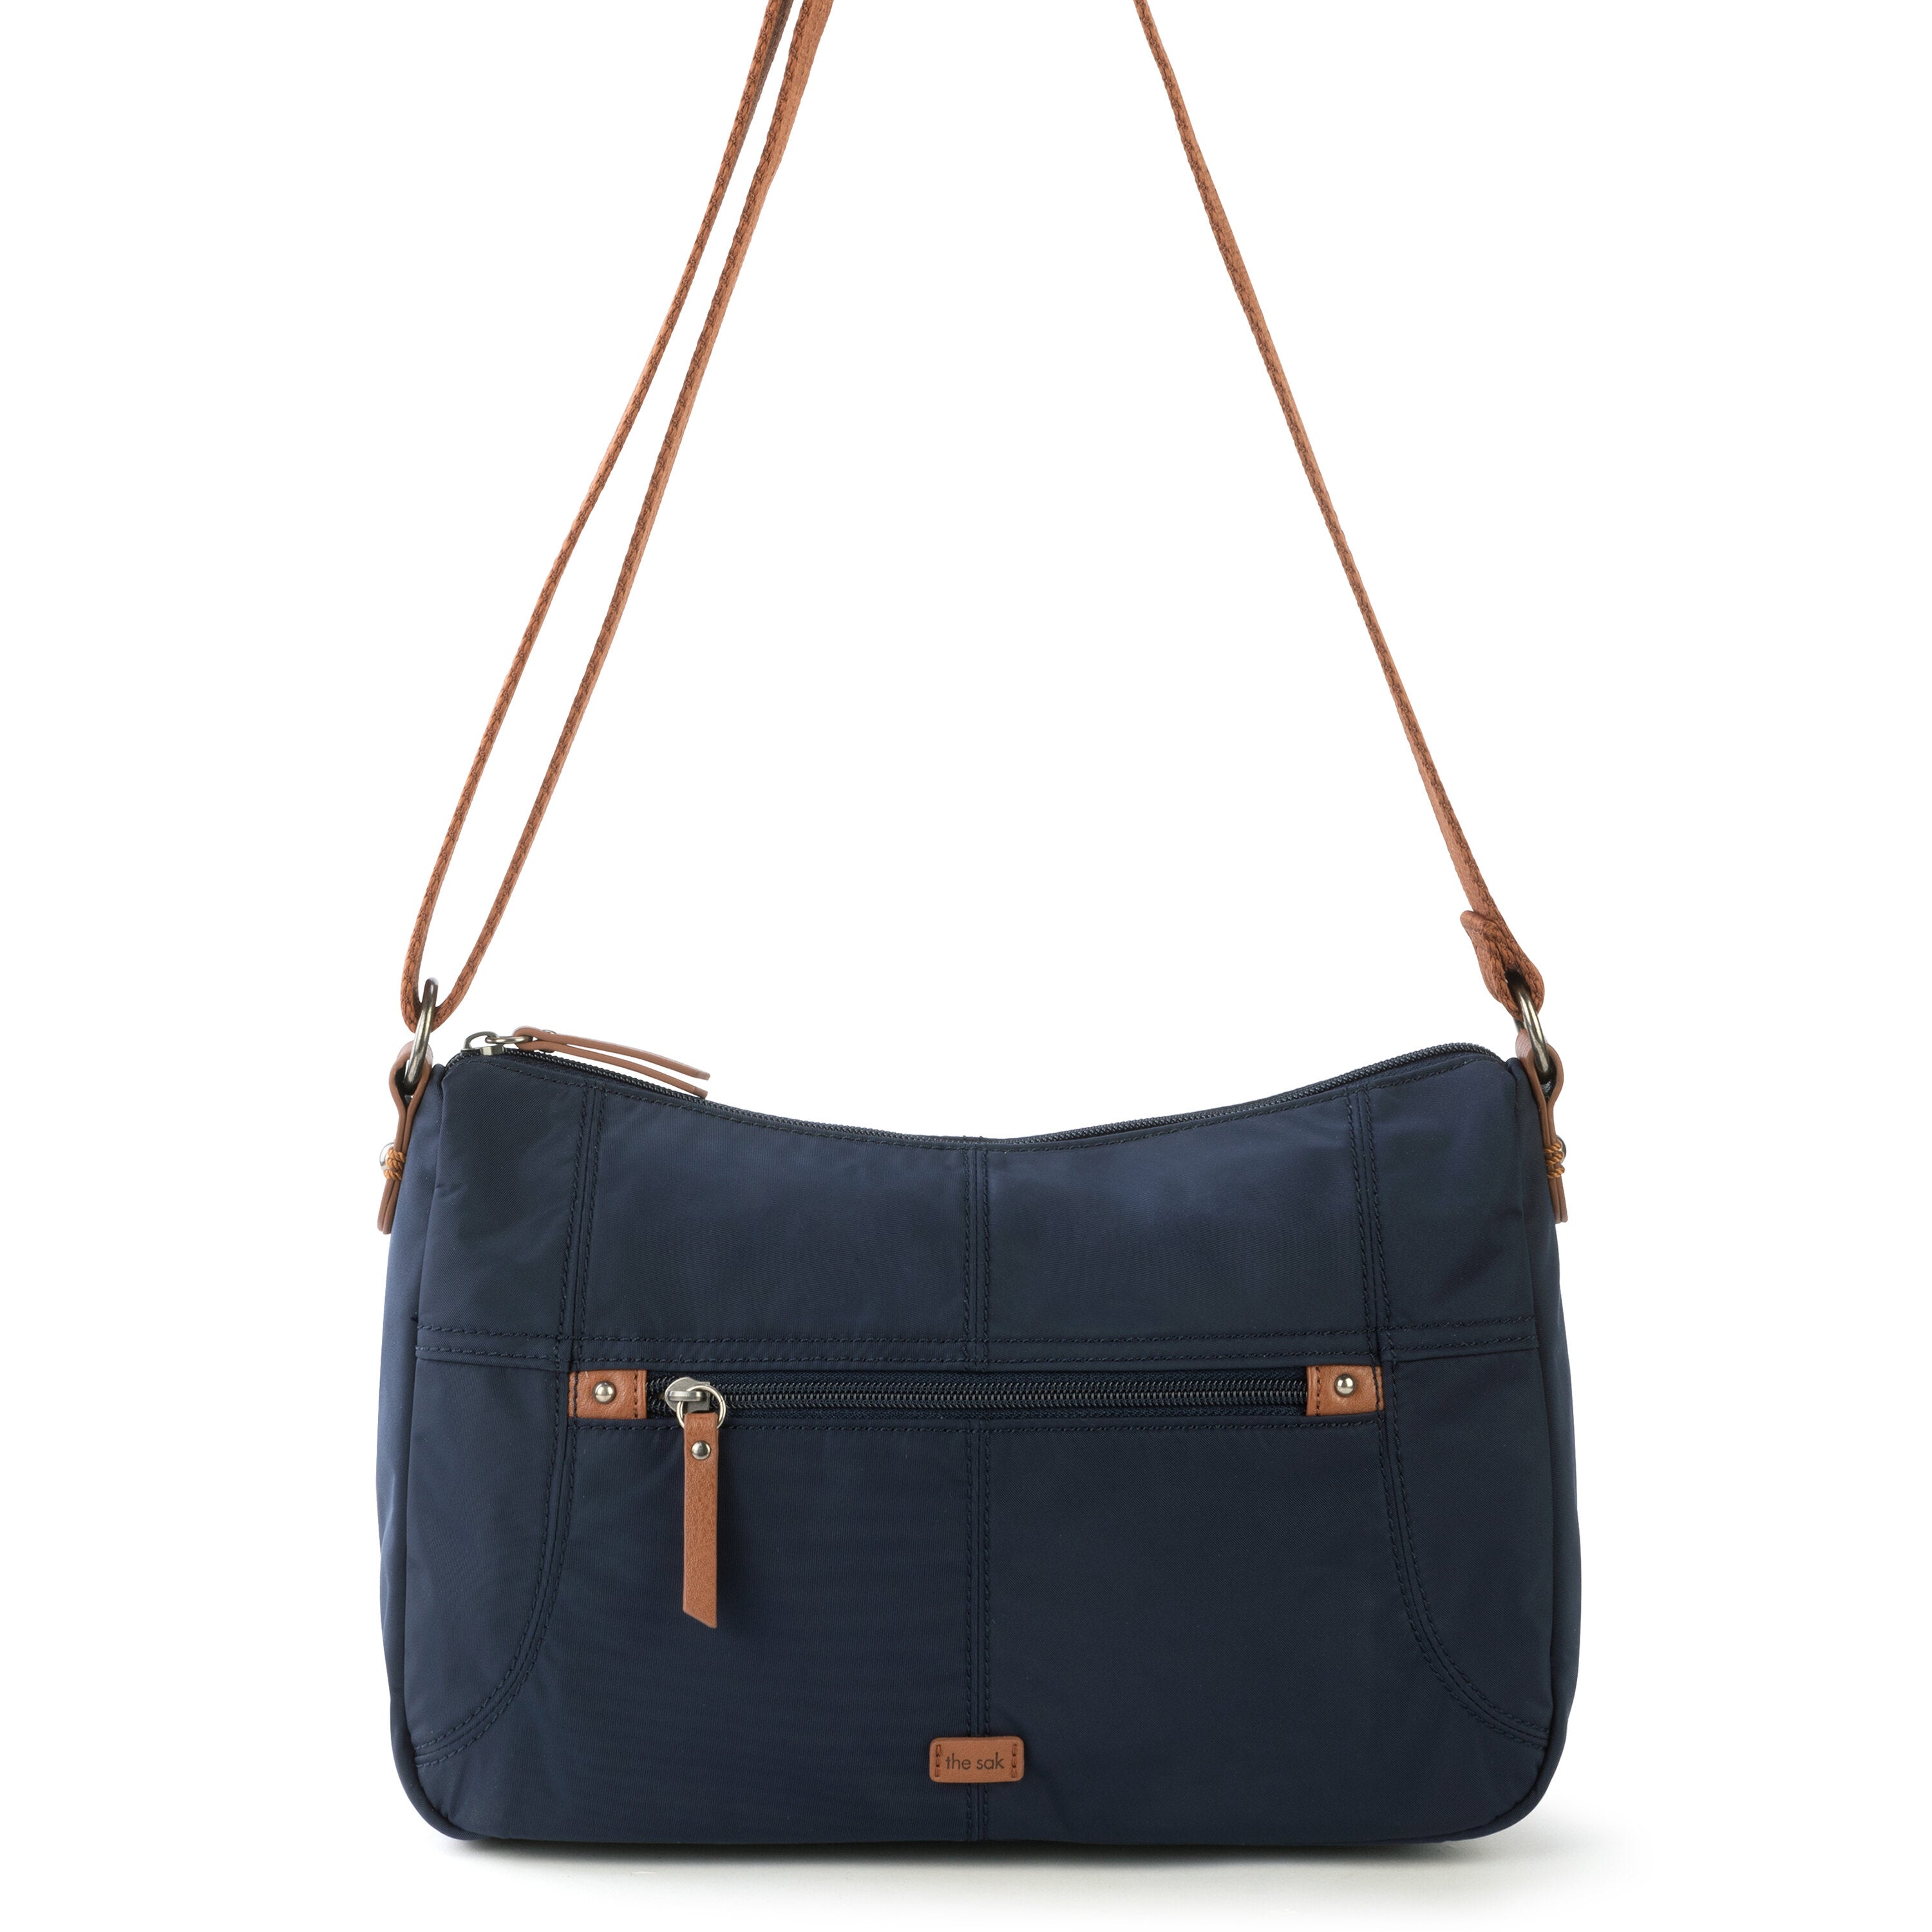 Sak Crossbody purse - clothing & accessories - by owner - apparel sale -  craigslist